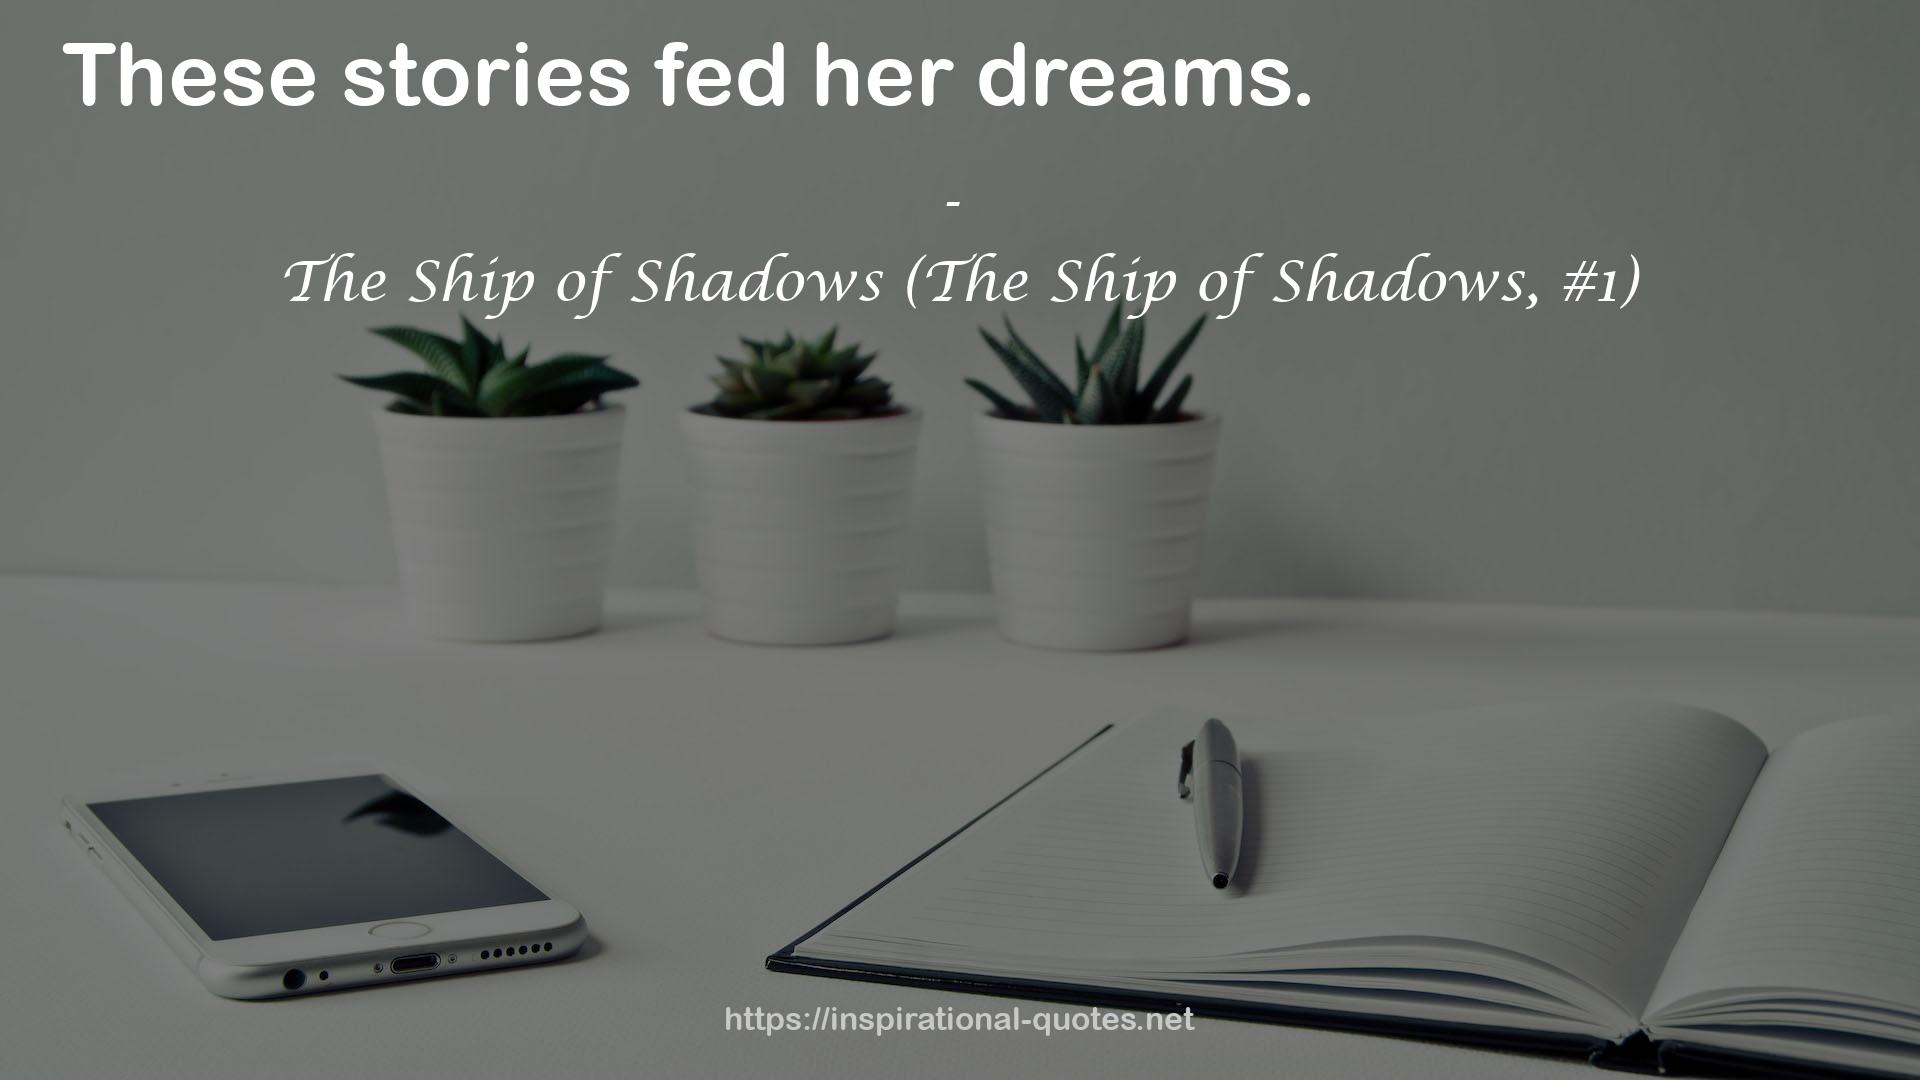 The Ship of Shadows (The Ship of Shadows, #1) QUOTES